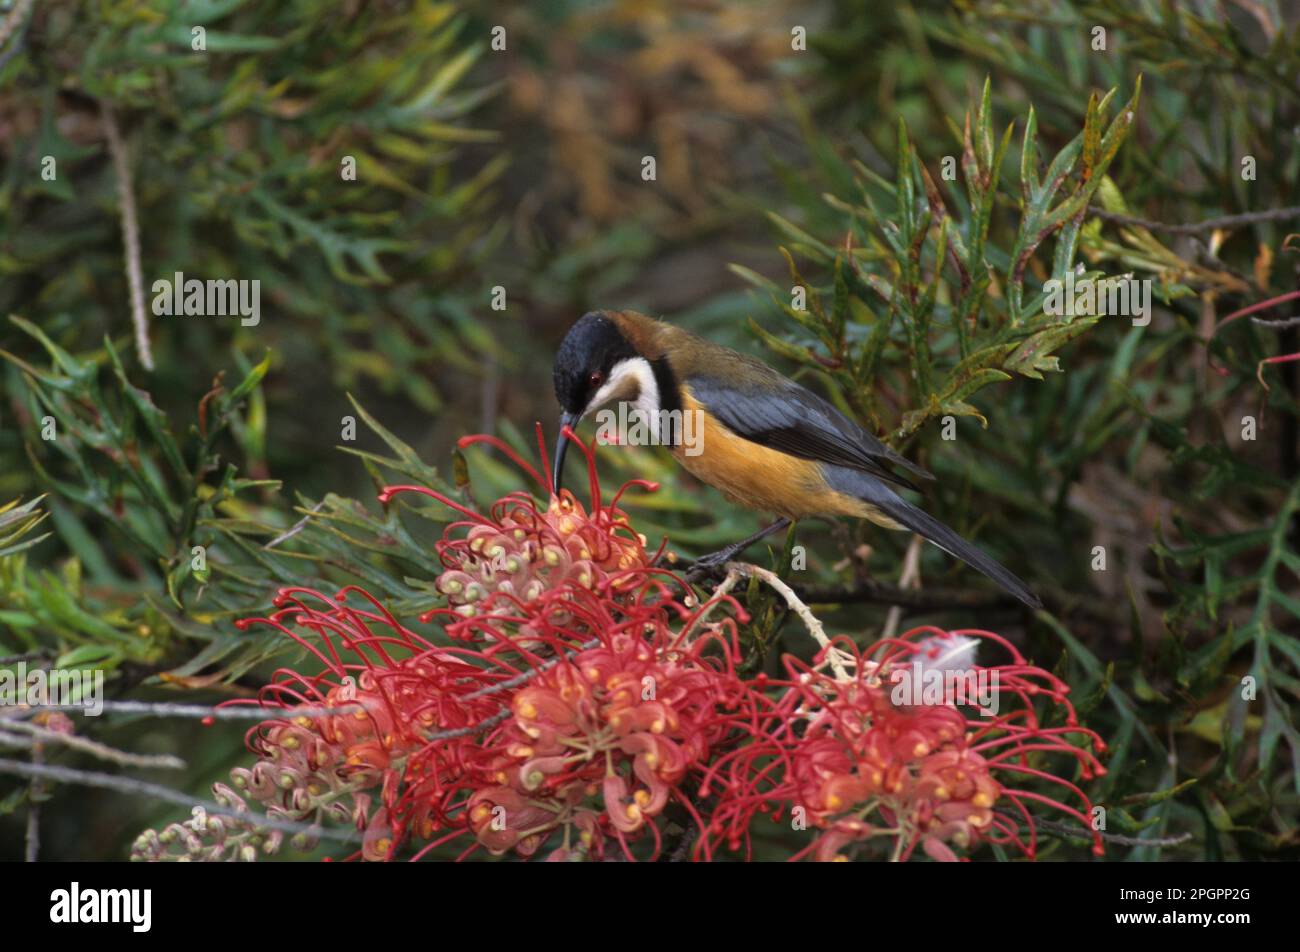 Eastern thornbill (Acanthorhynchus tenuirostris) feeds on red flowers on the bush, Australia Stock Photo